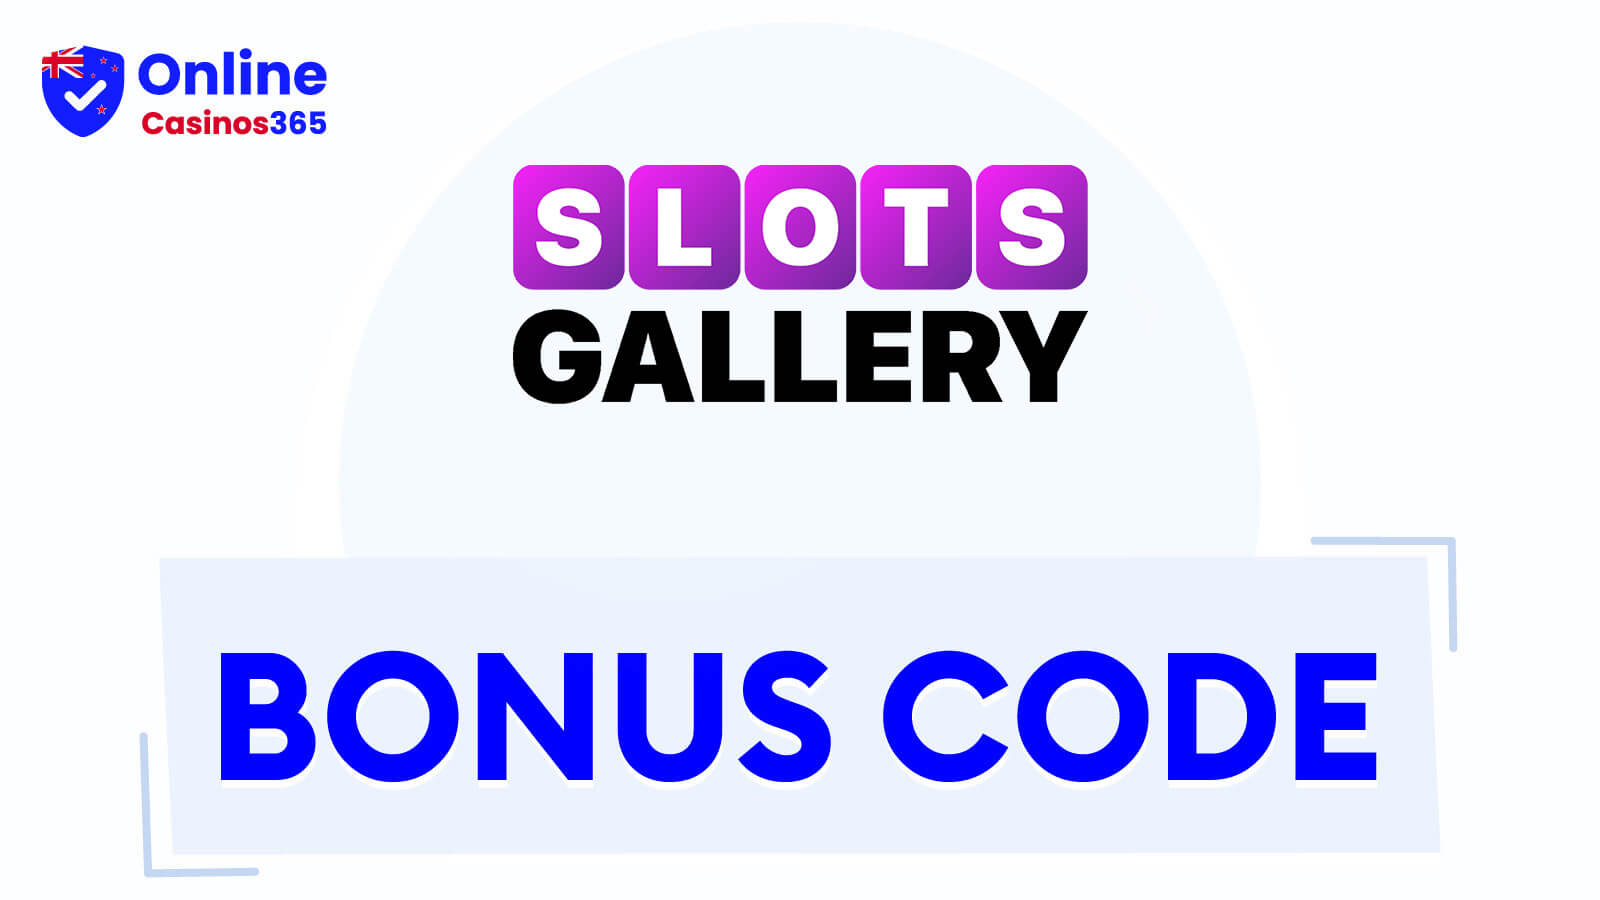 Slots Gallery Casino Promo Codes